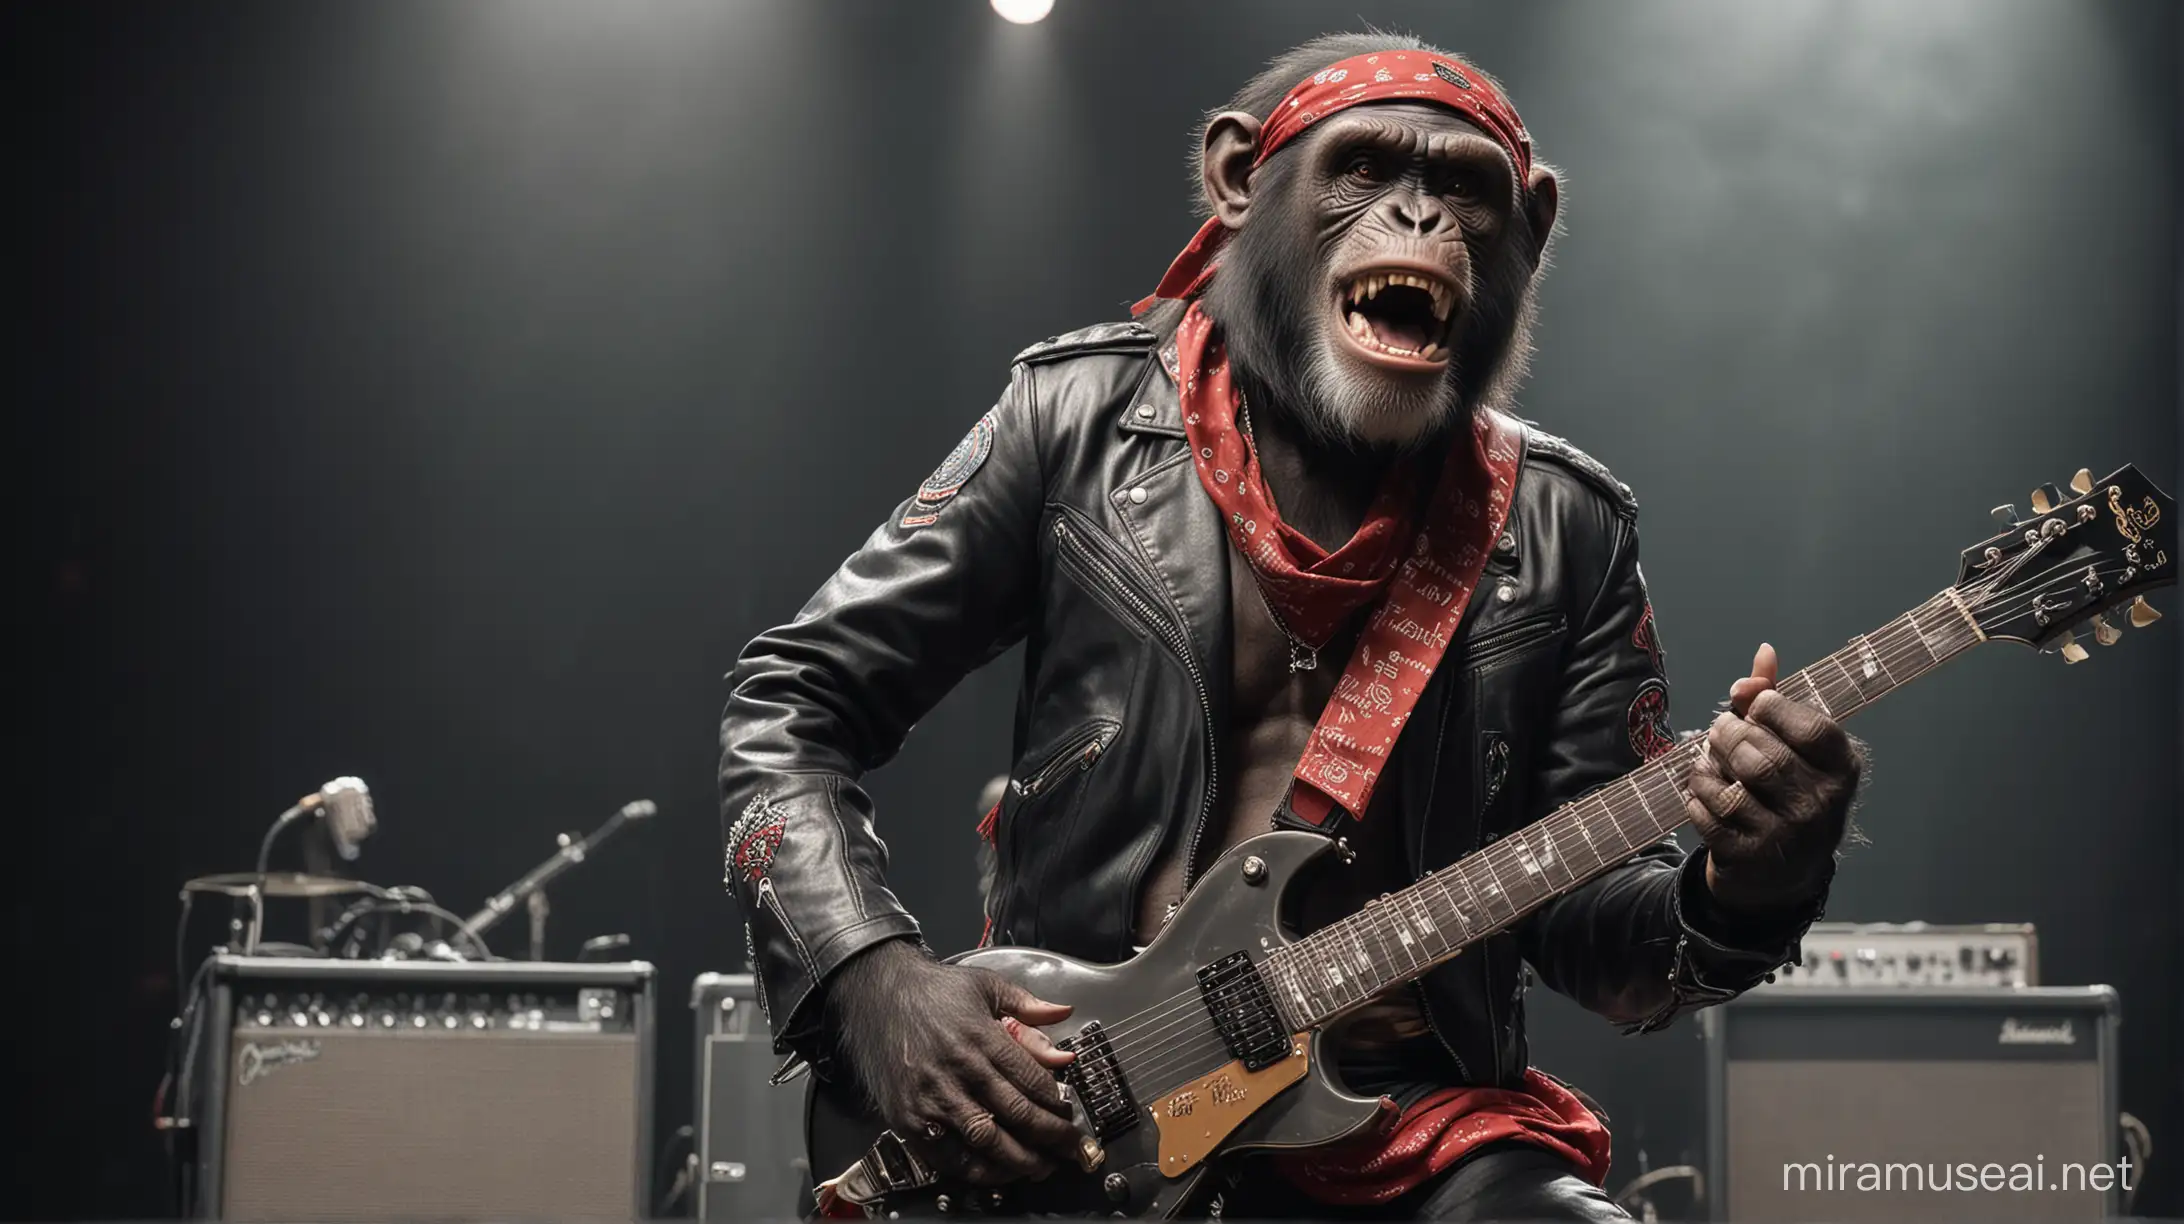 Chimpanzee Heavy Metal Rock Star Gibson Les Paul Performance